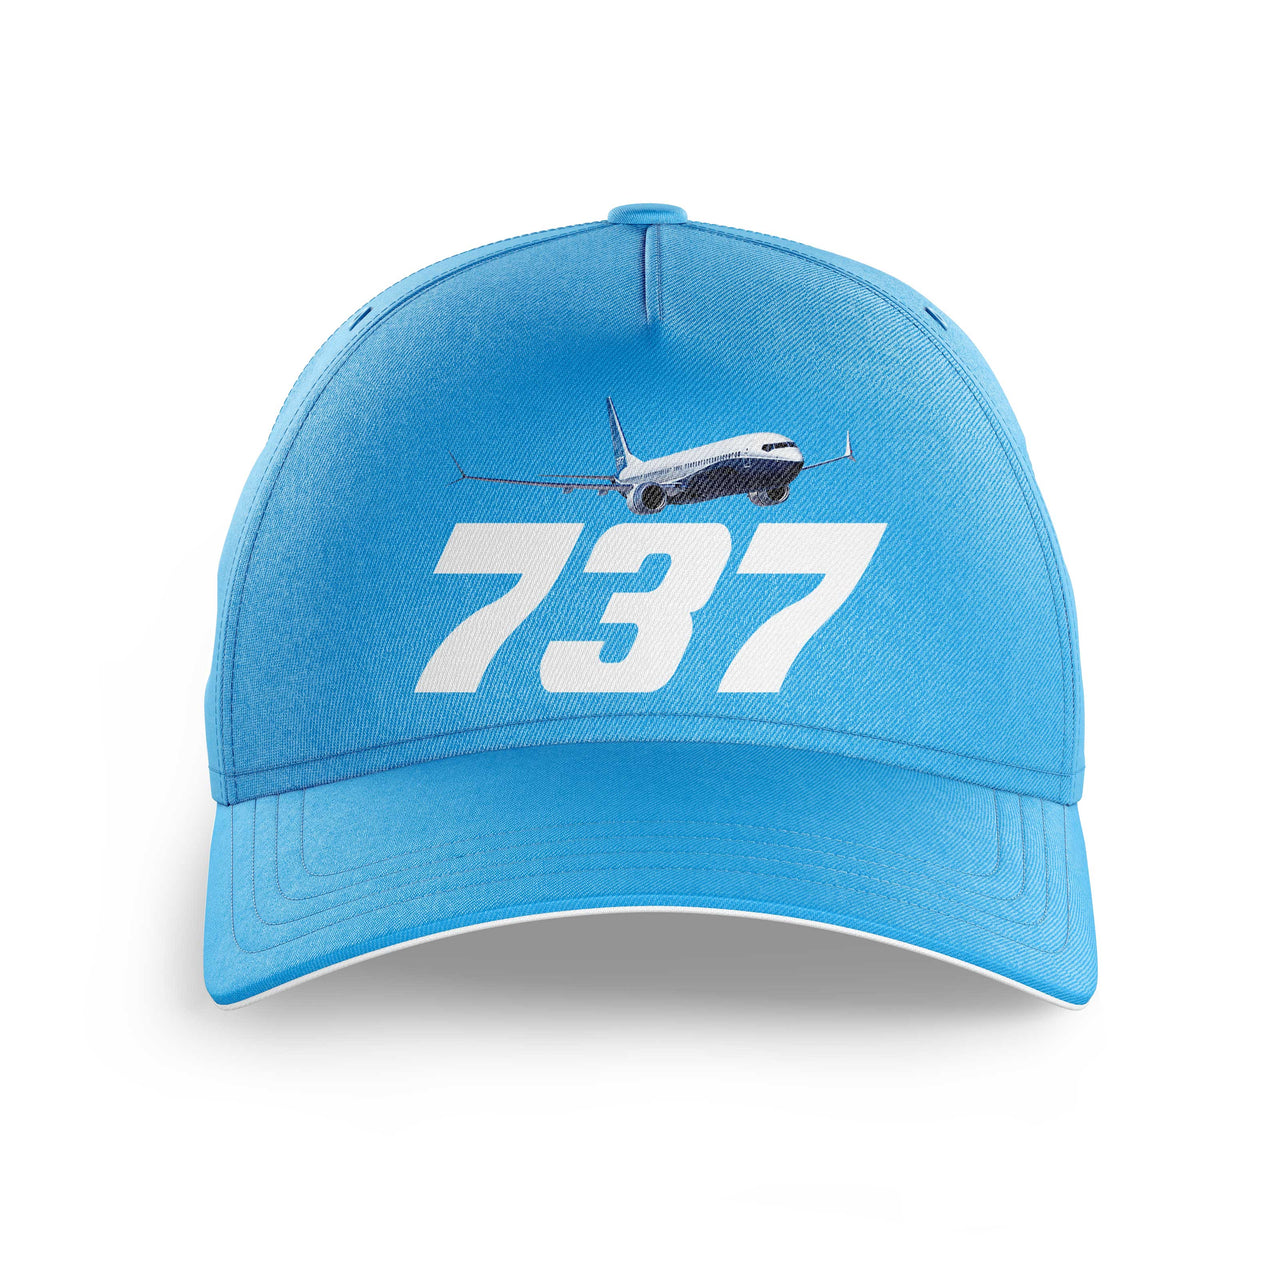 Super Boeing 737-800 Printed Hats